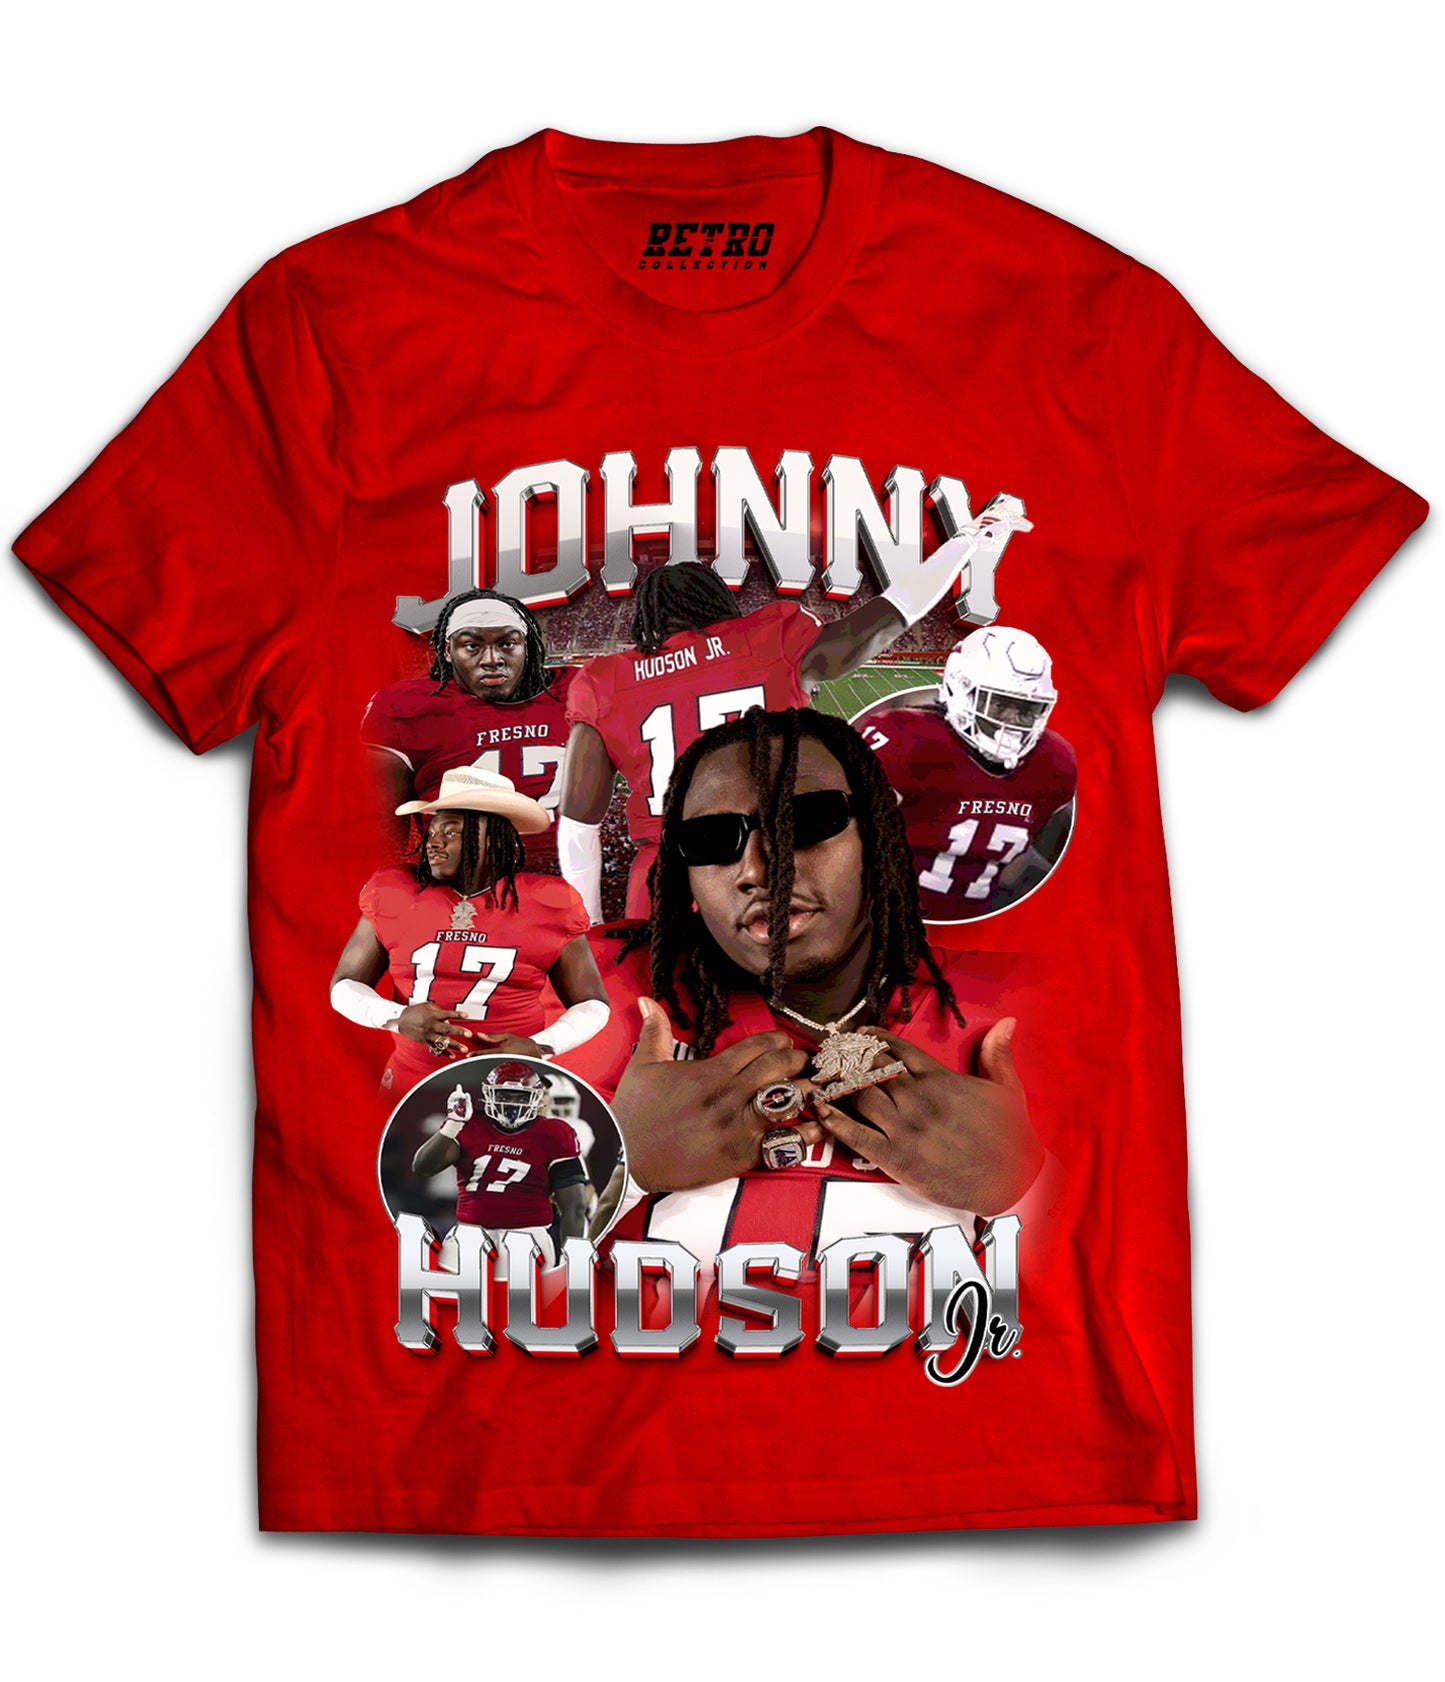 Johnny Hudson Jr. Tribute Shirt *LIMITED EDITION* (Black, Red, White)